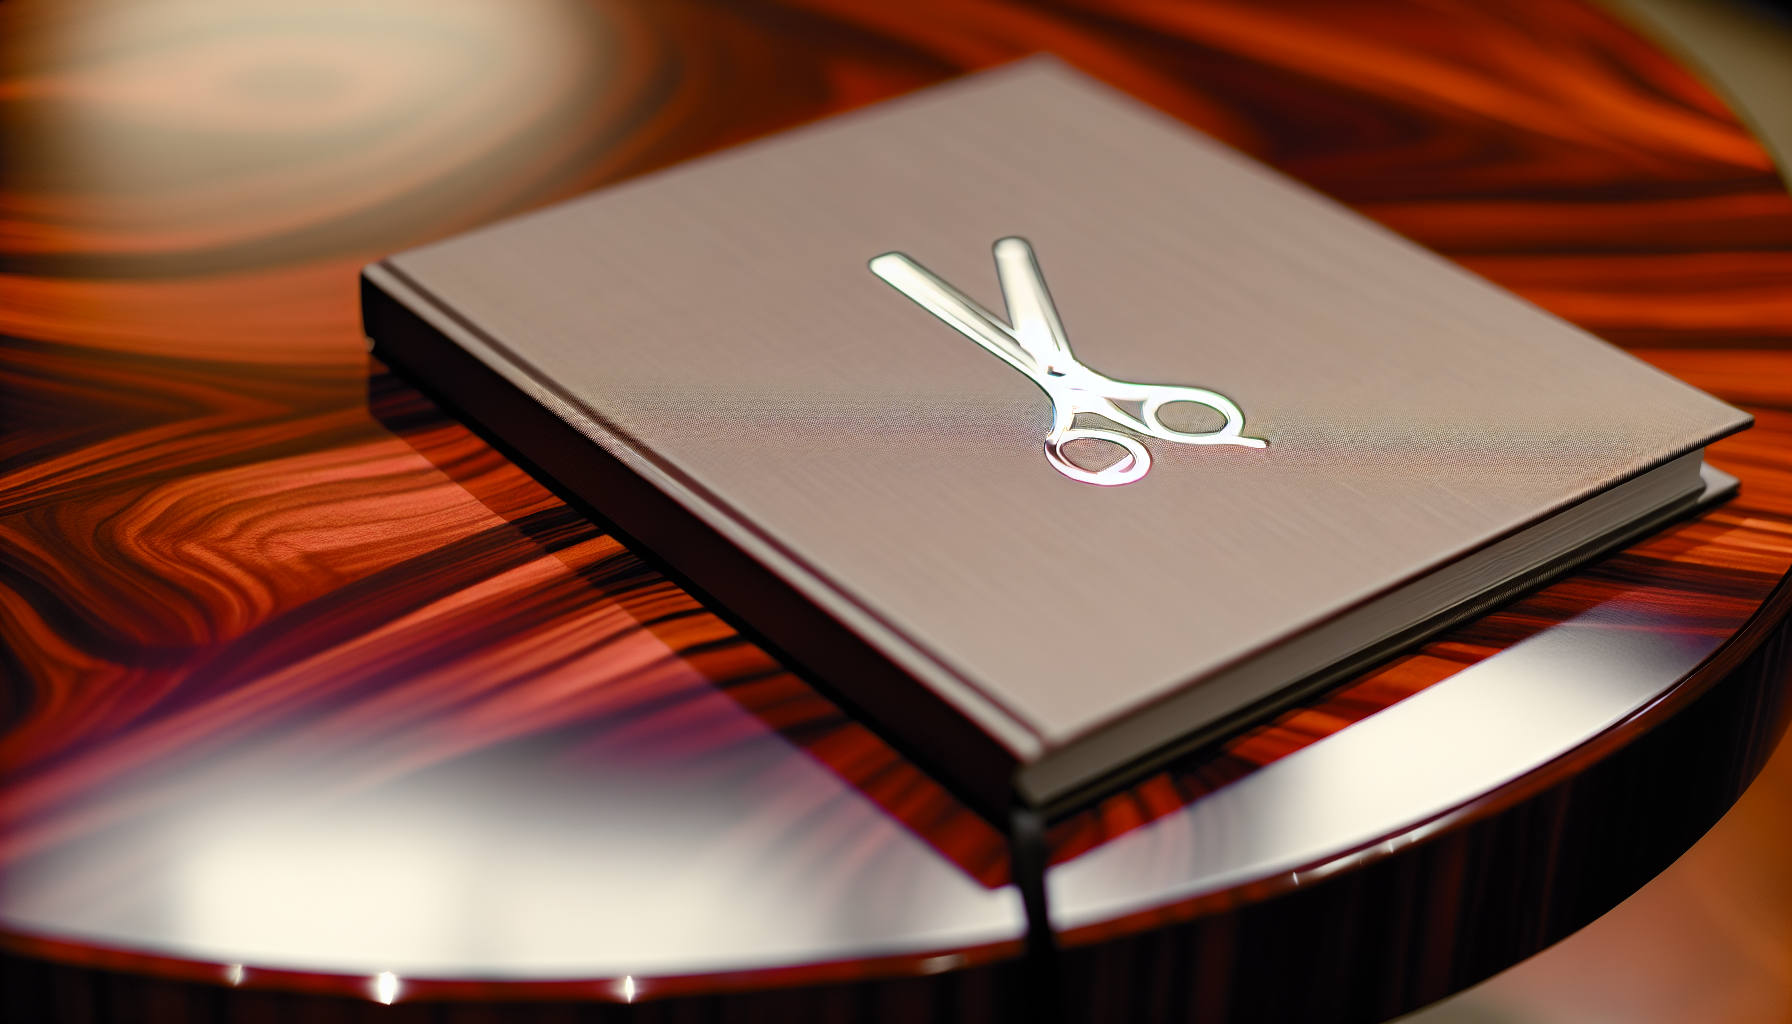 A professional-looking salon handbook with the salon's logo